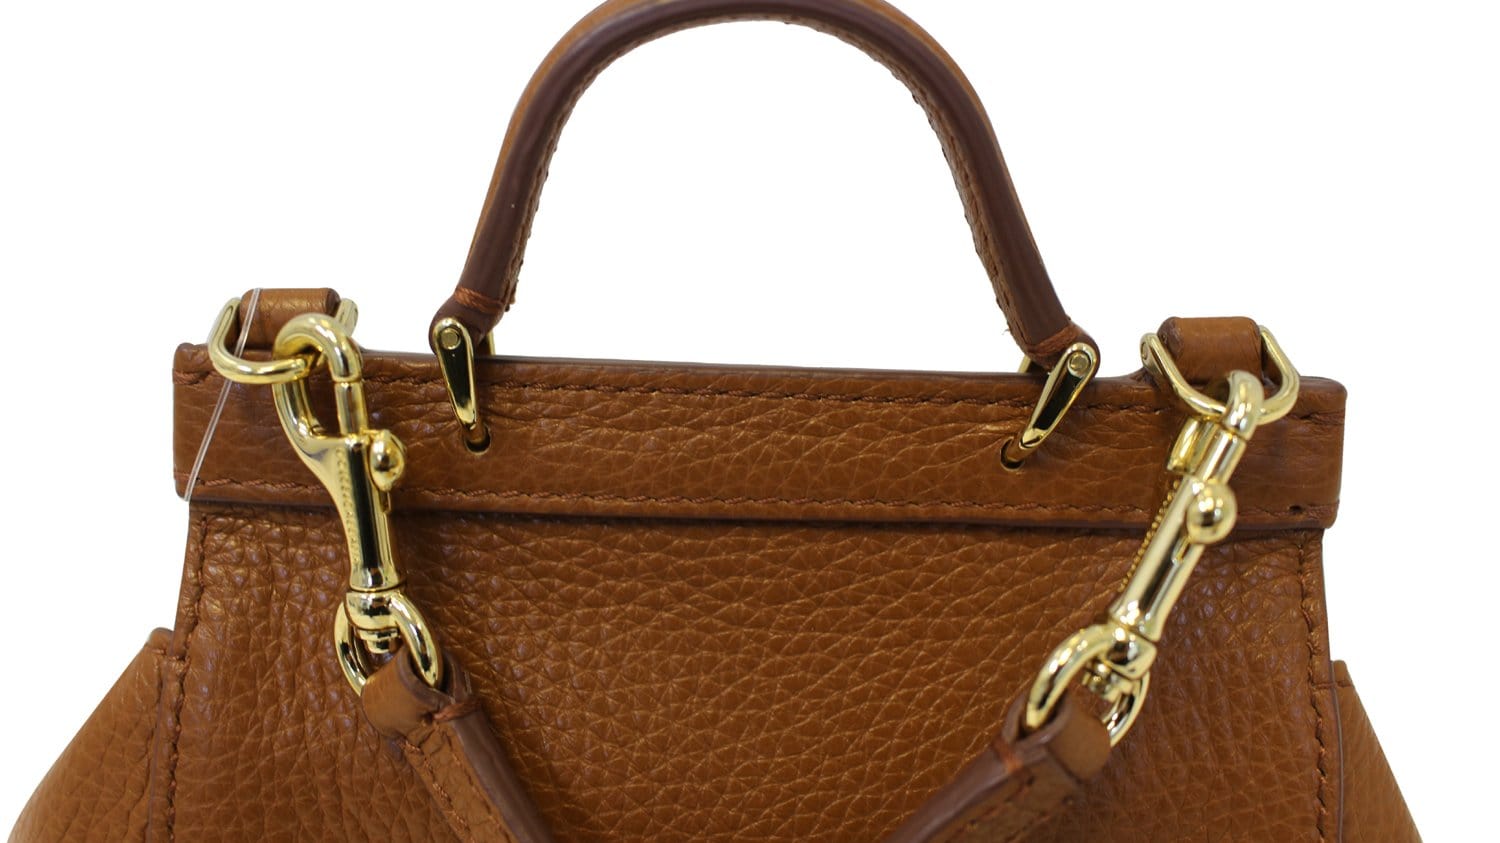 Dolce & Gabbana Sicily Small Soft Leather Shoulder Bag - ShopStyle